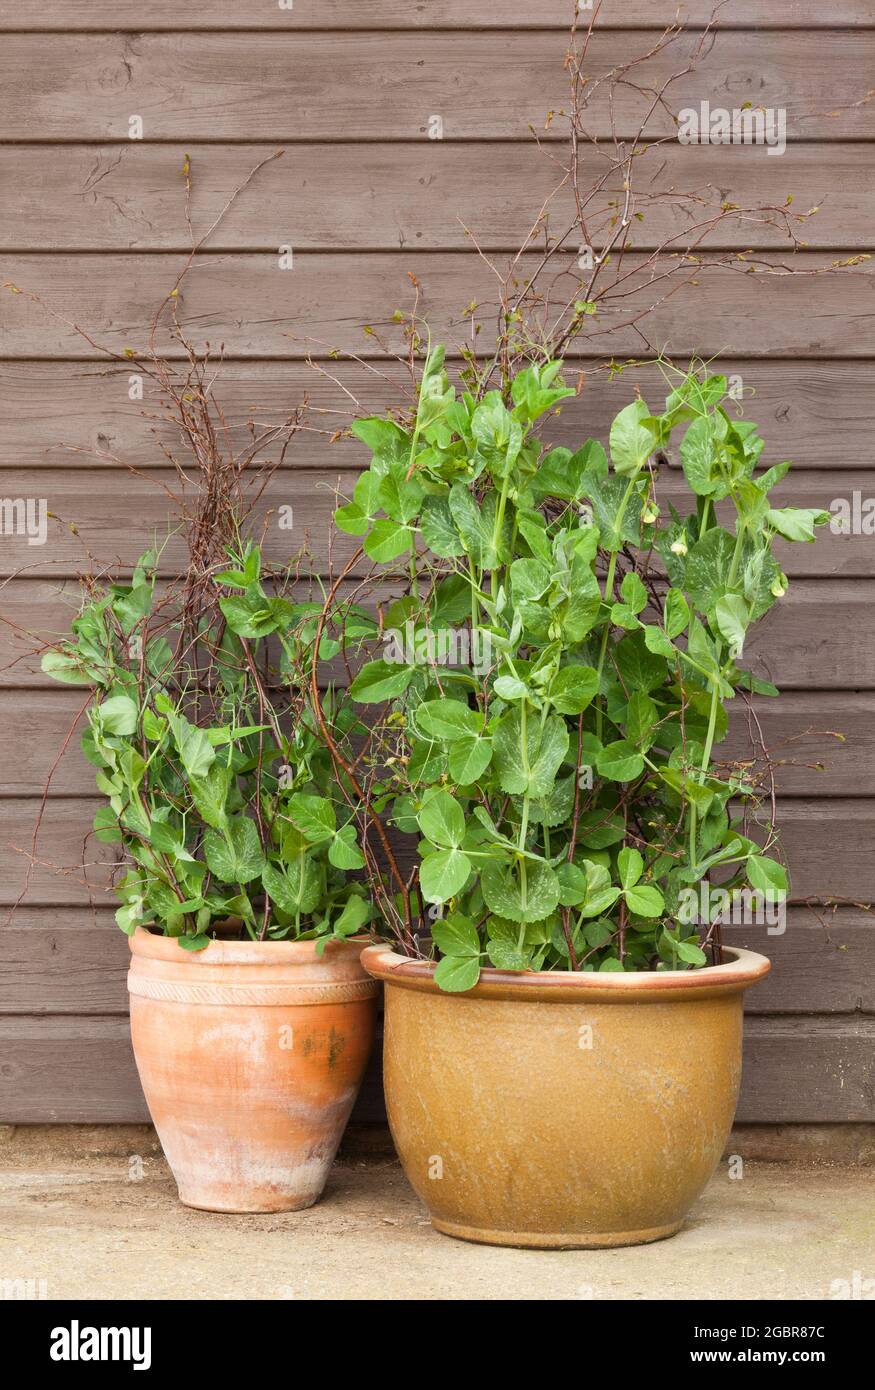 Two pots of edible pea plants Stock Photo